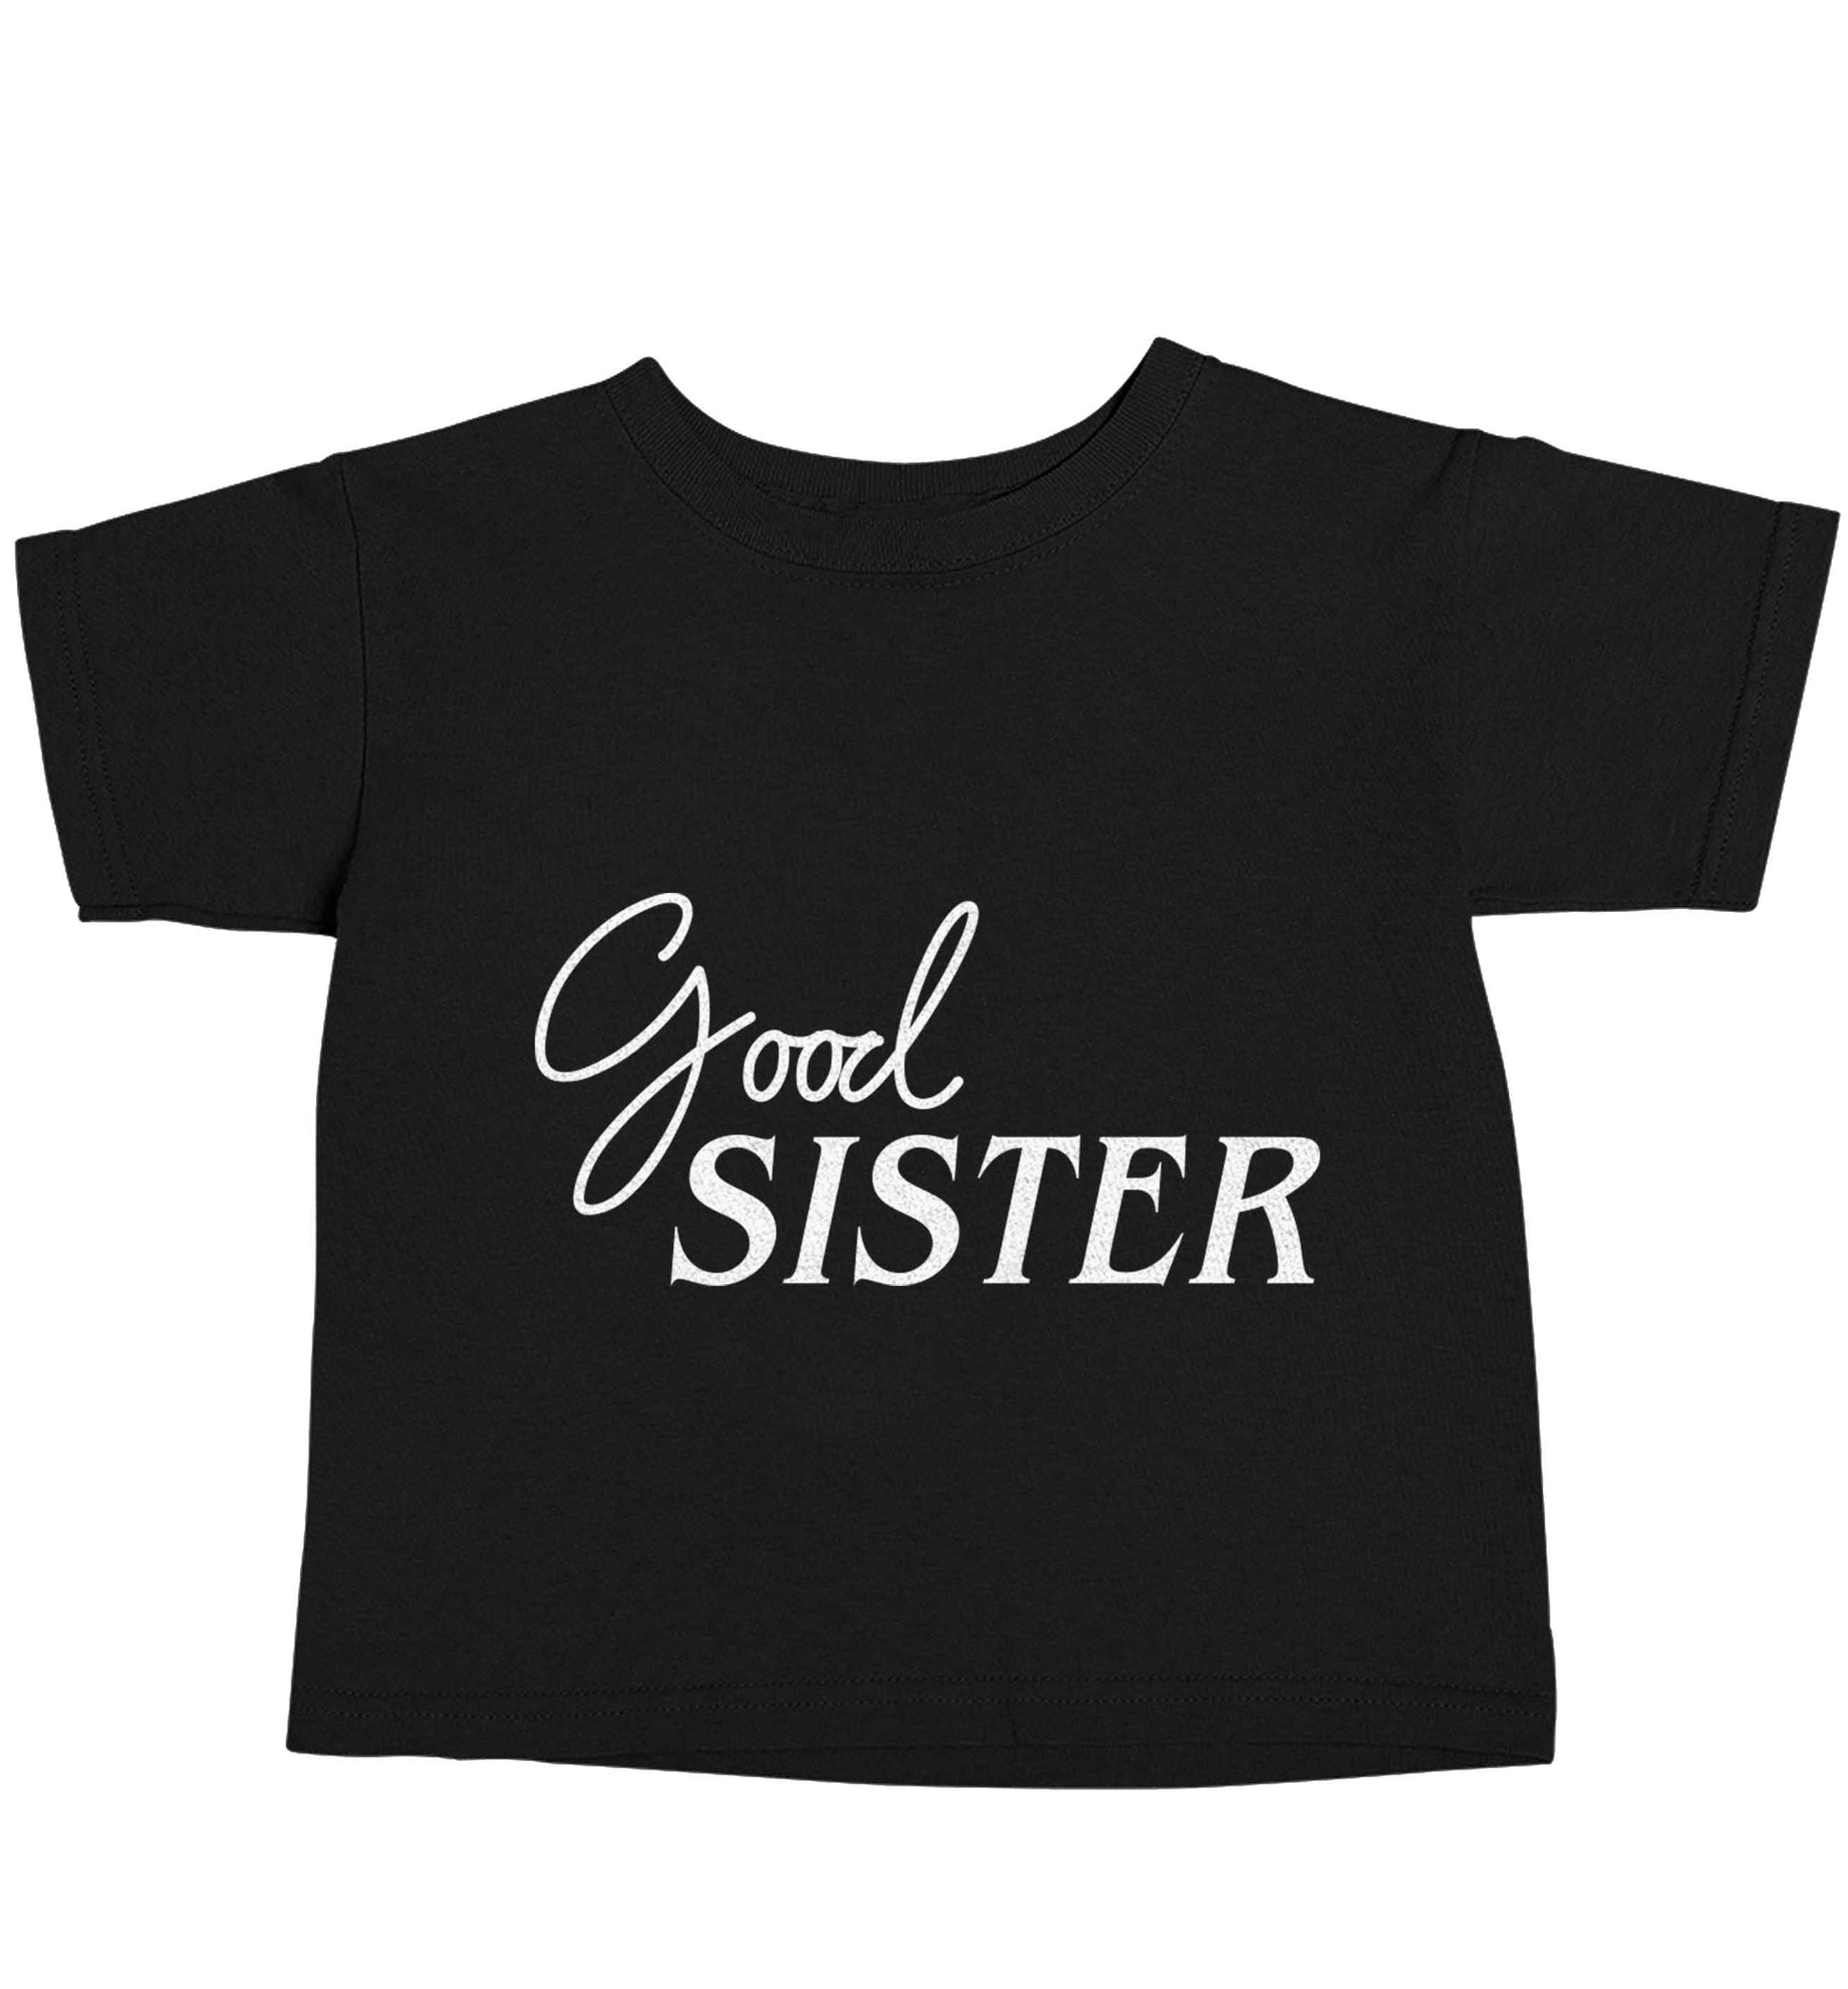 Good sister Black baby toddler Tshirt 2 years